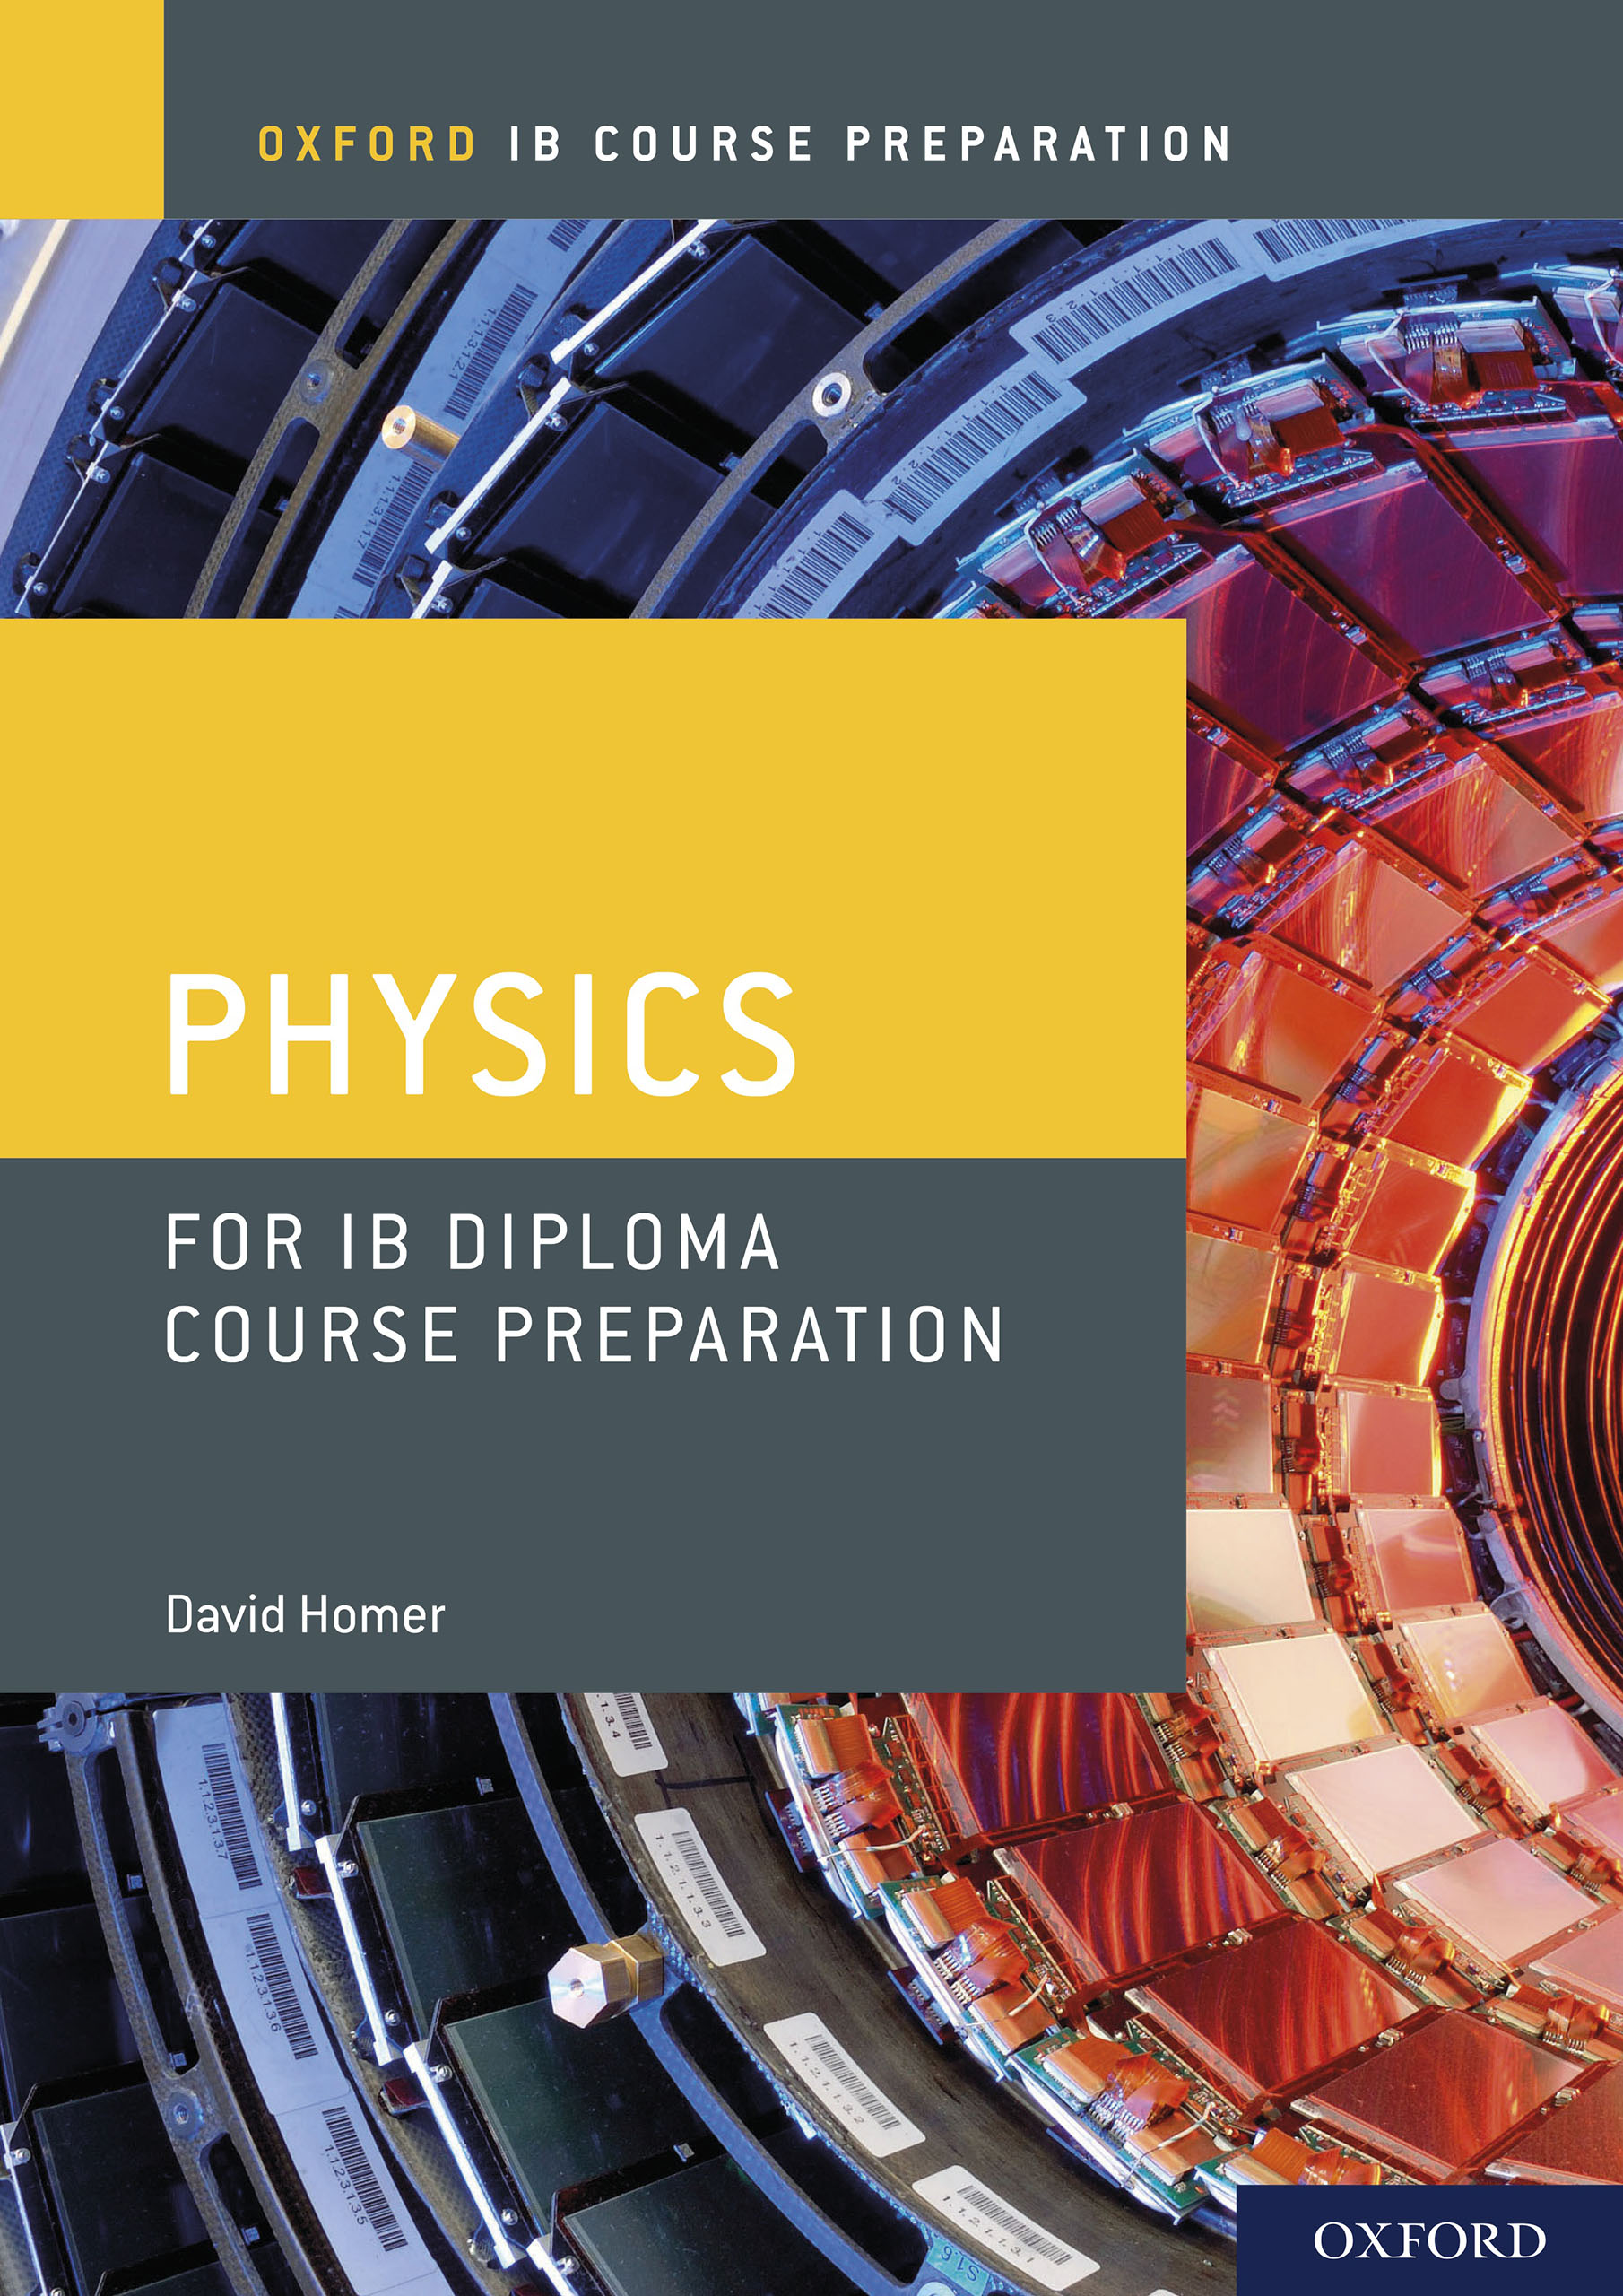 Oxford IB Course Preparation: Physics for IB Diploma Course Preparation